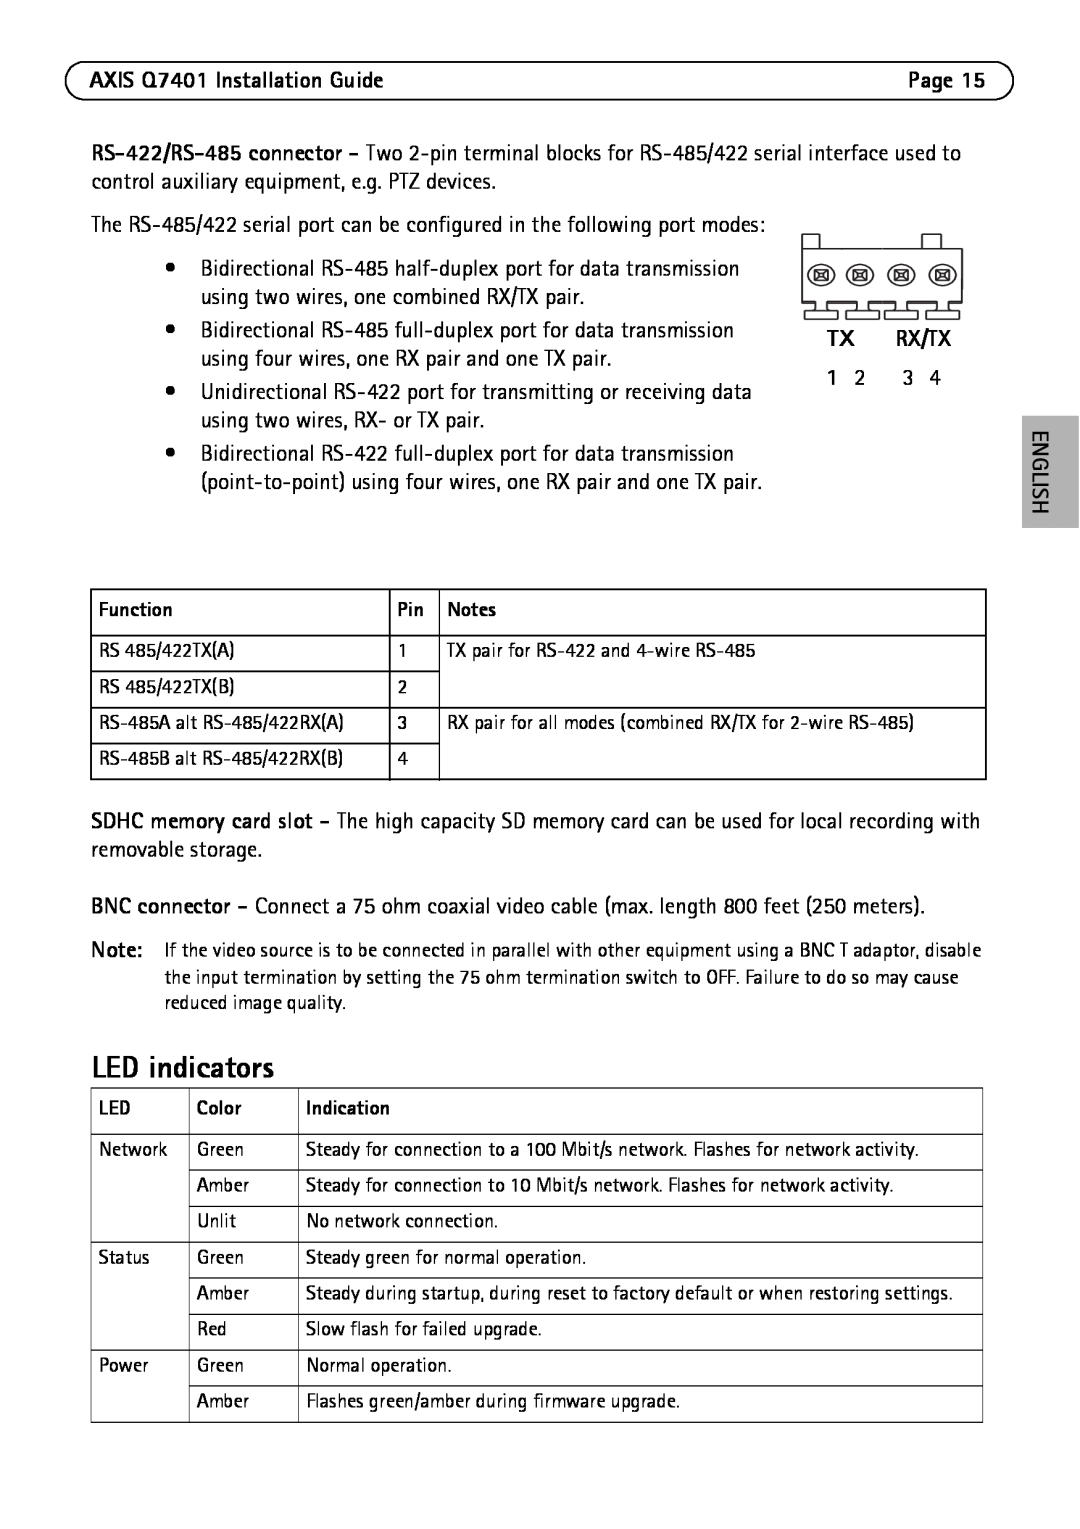 Axis Communications manual LED indicators, AXIS Q7401 Installation Guide, Tx Rx/Tx, English 